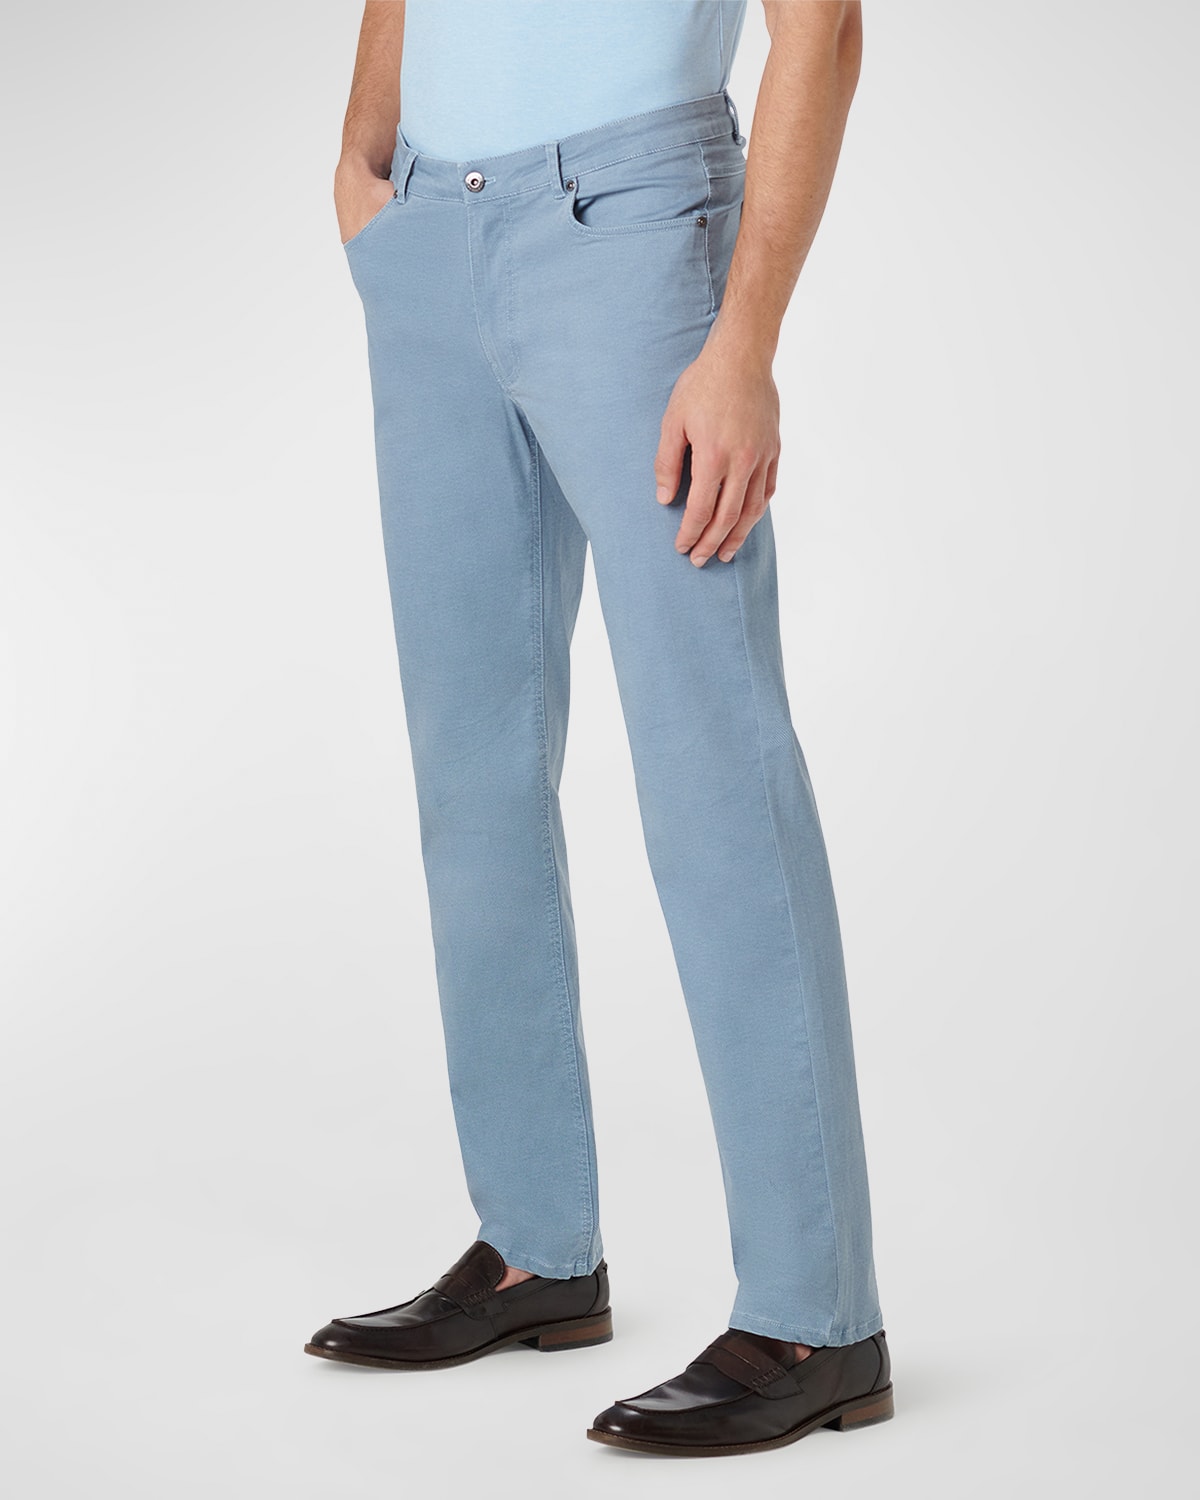 Men's Printed 5-Pocket Pants